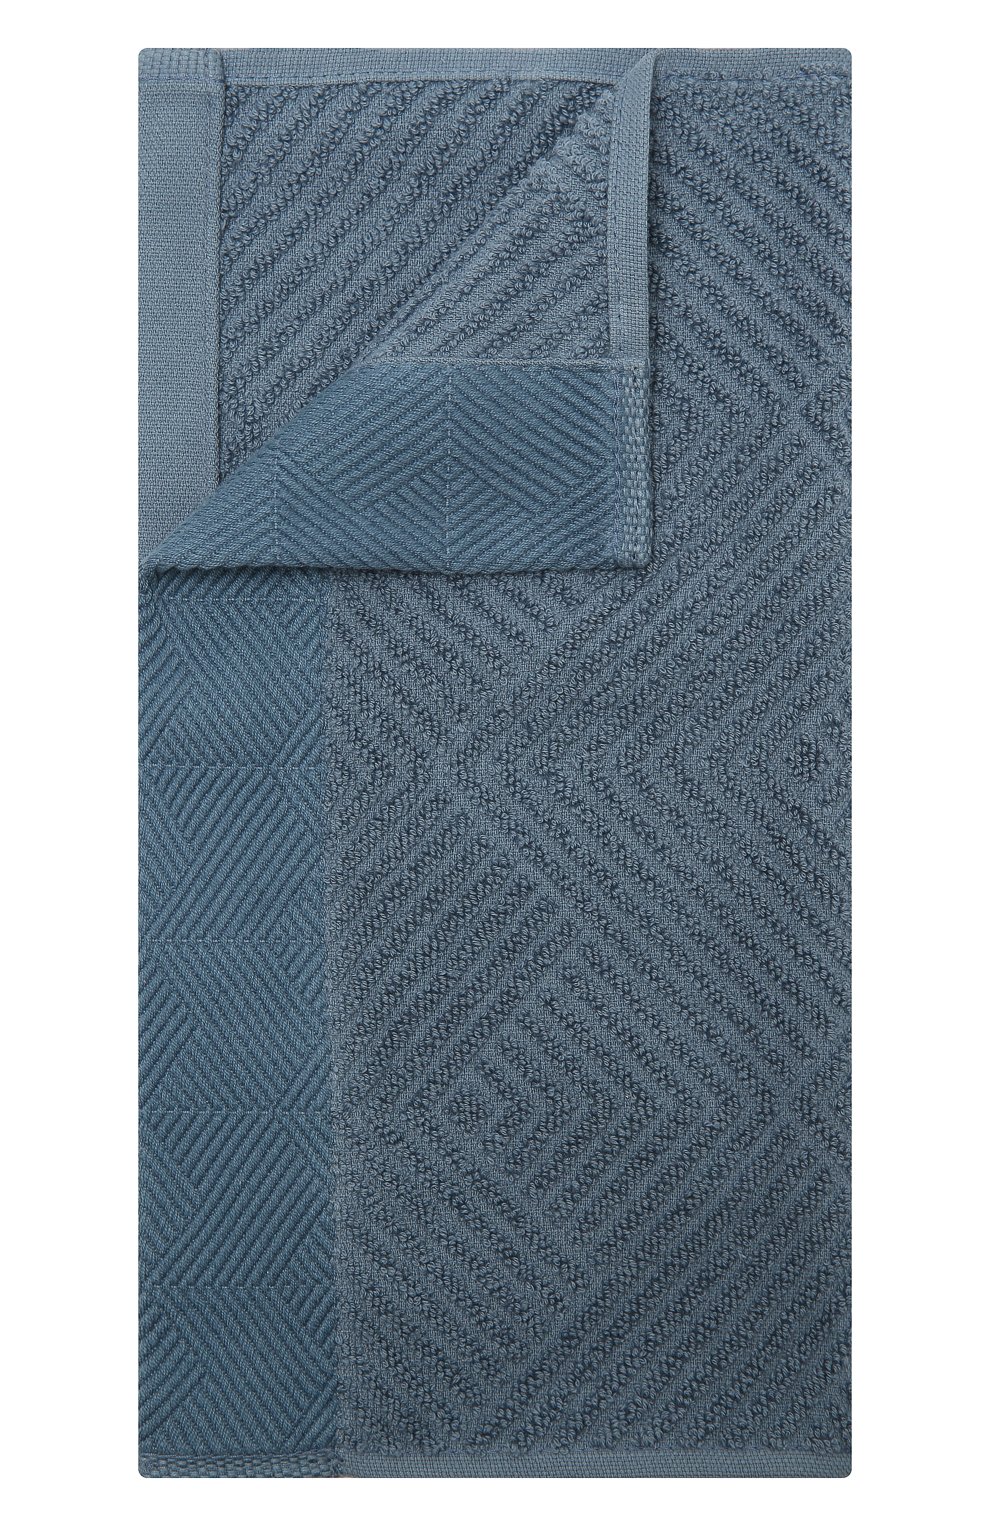 Хлопковое полотенце FRETTE синего цвета, арт. FR6243 D0500 030A | Фото 1